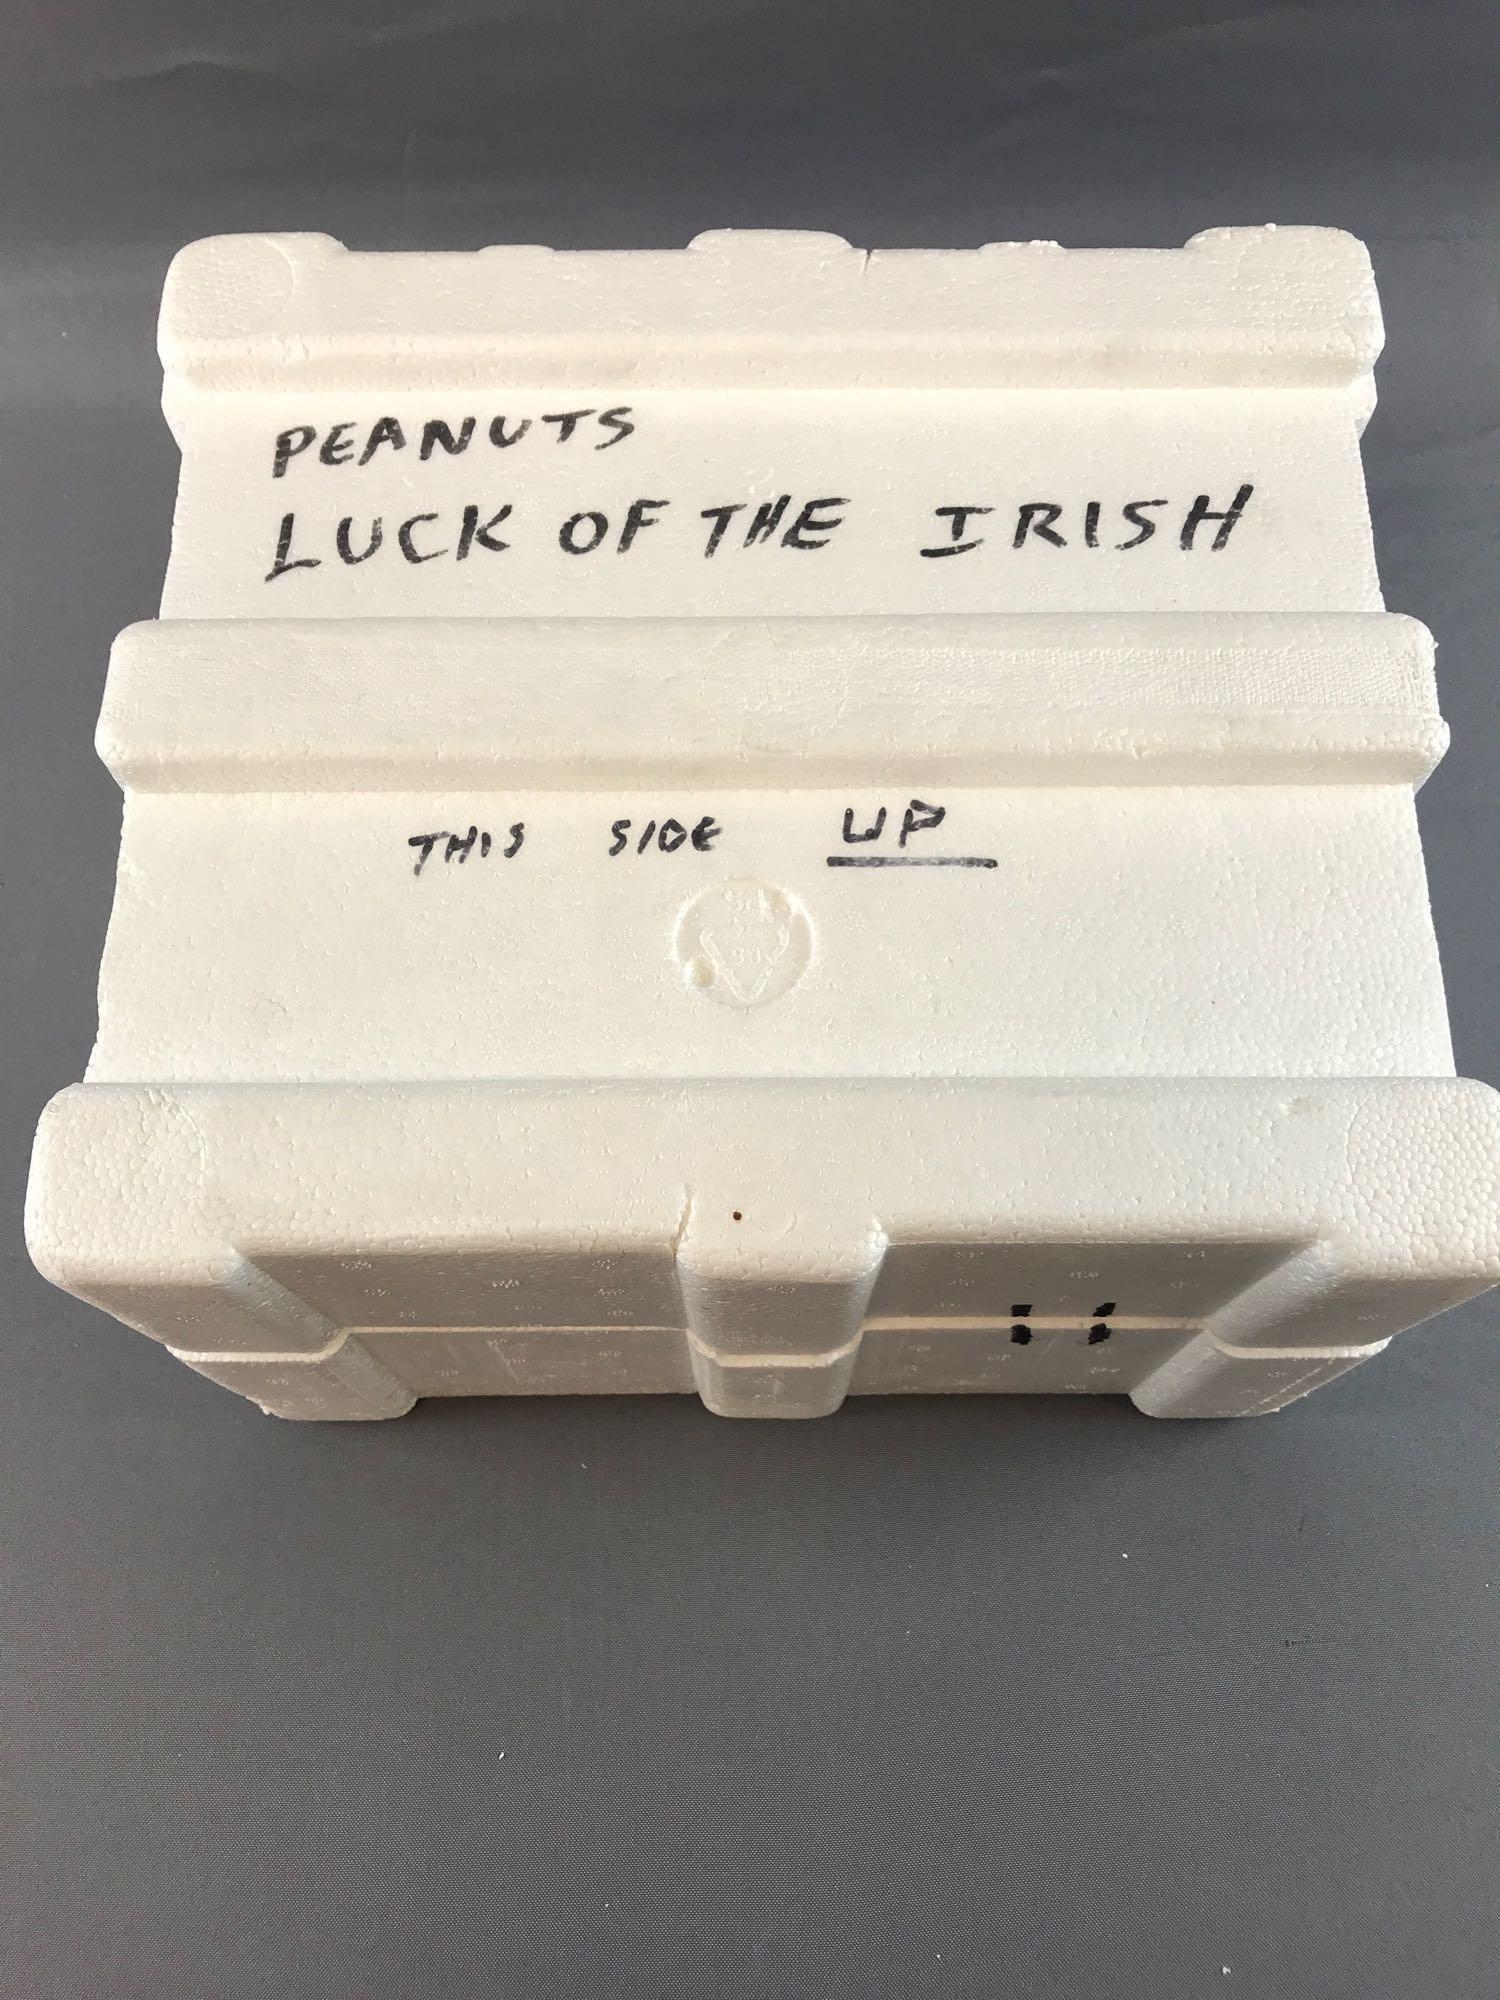 Peanuts Luck of the Irish by Danbury Mint